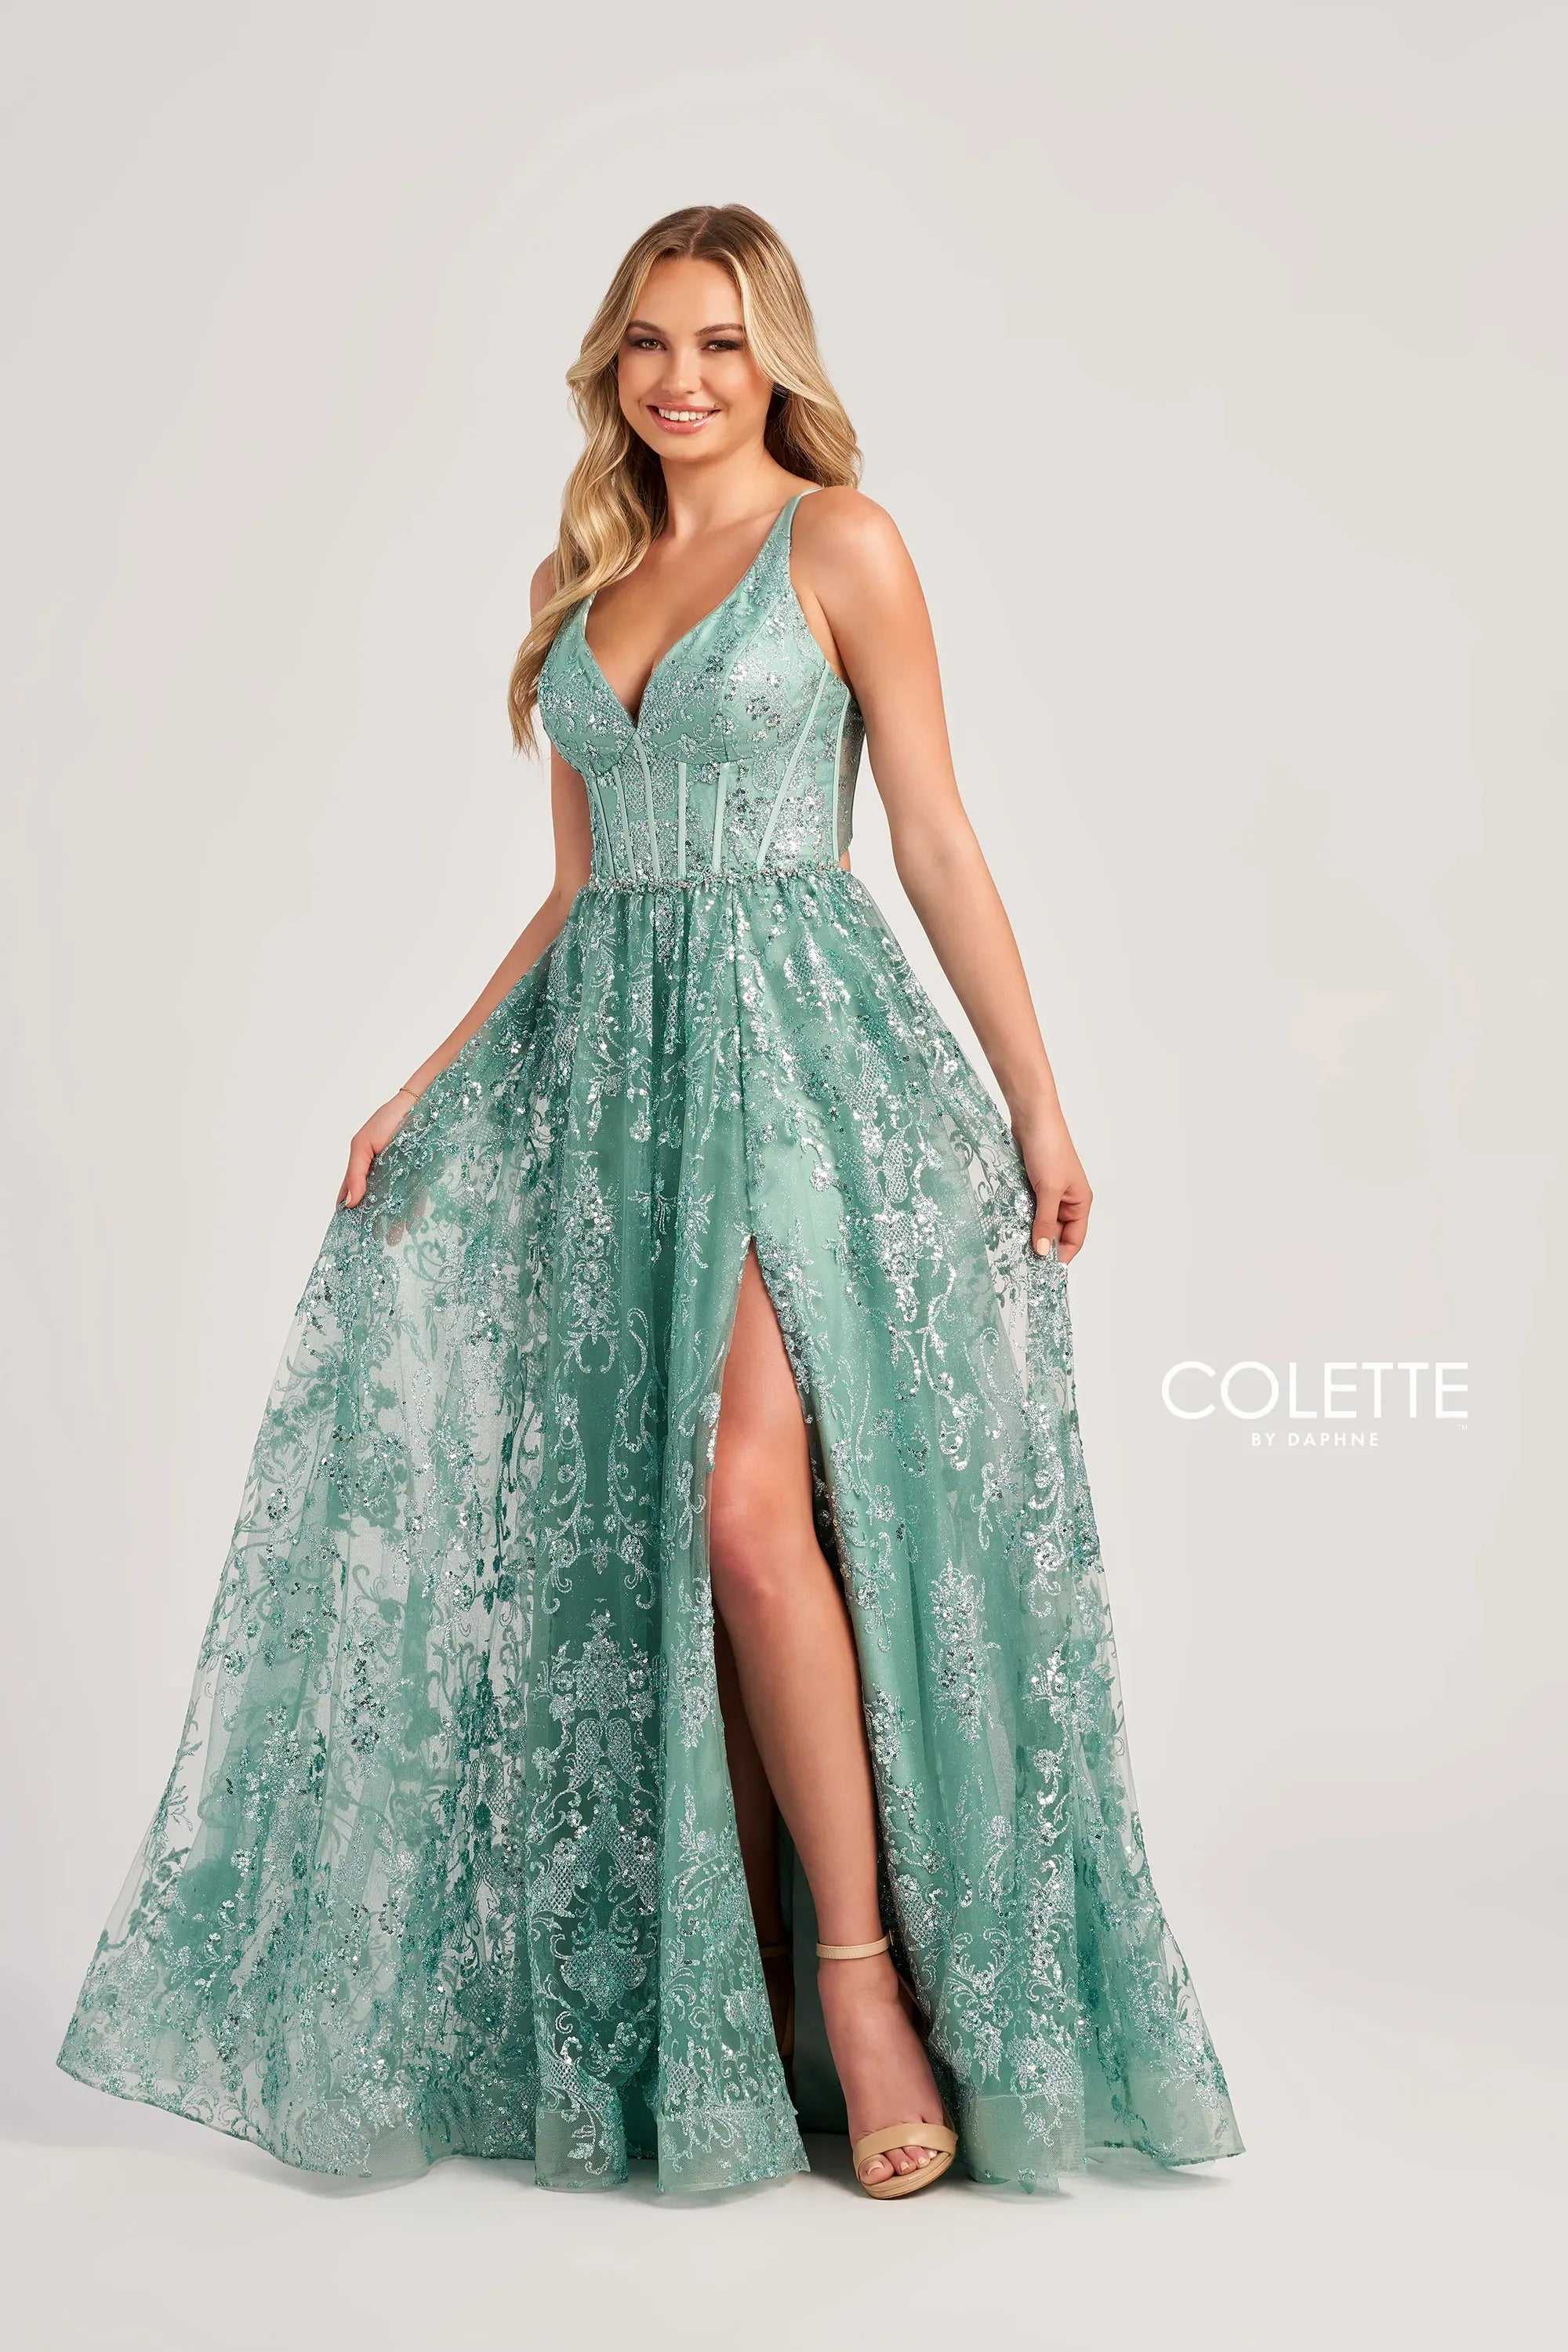 Colette By Daphne, Colette By Daphne CL5134 - Glitter Boned Bodice Prom Dress